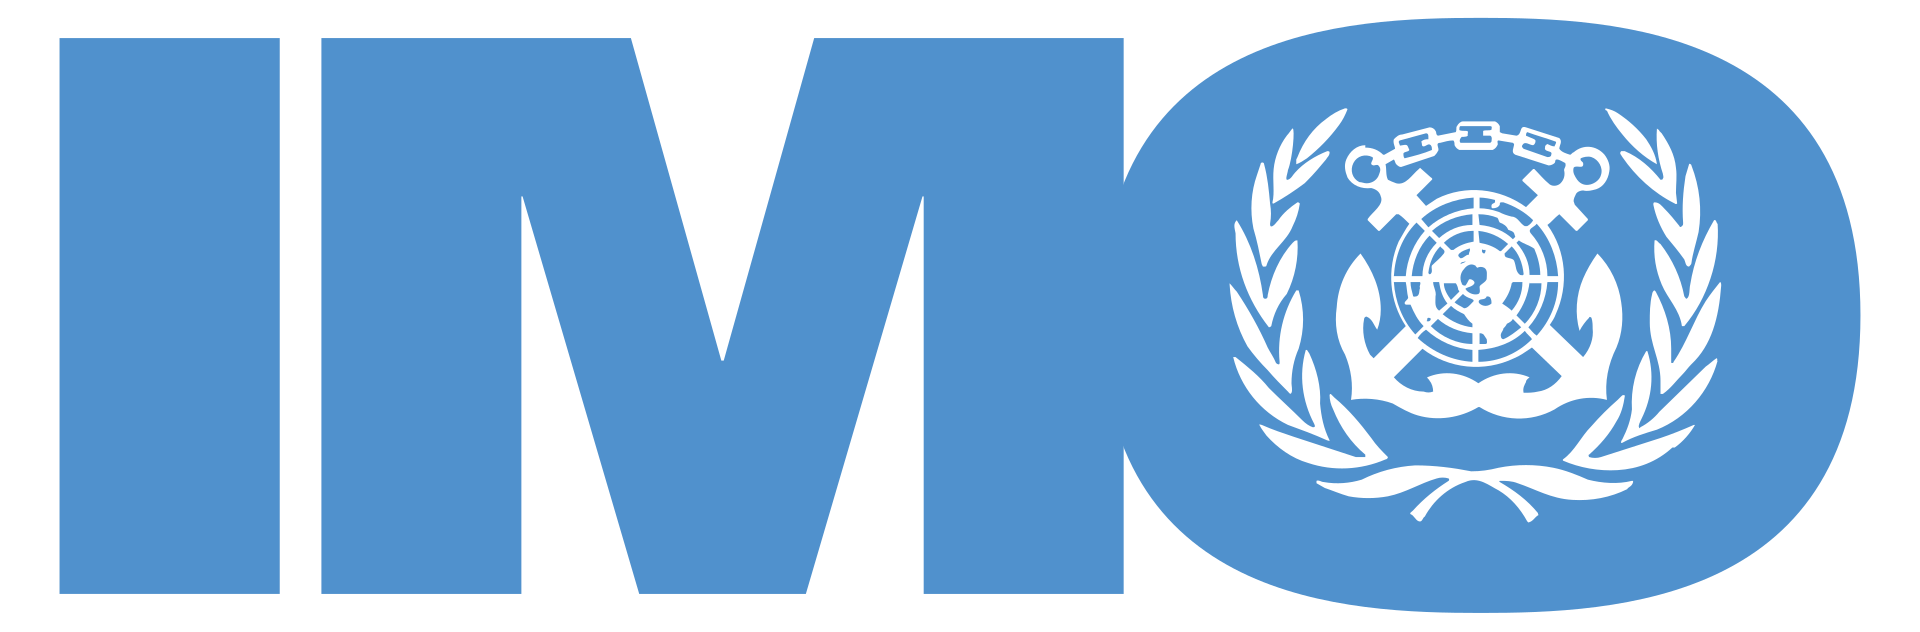 IMO logo